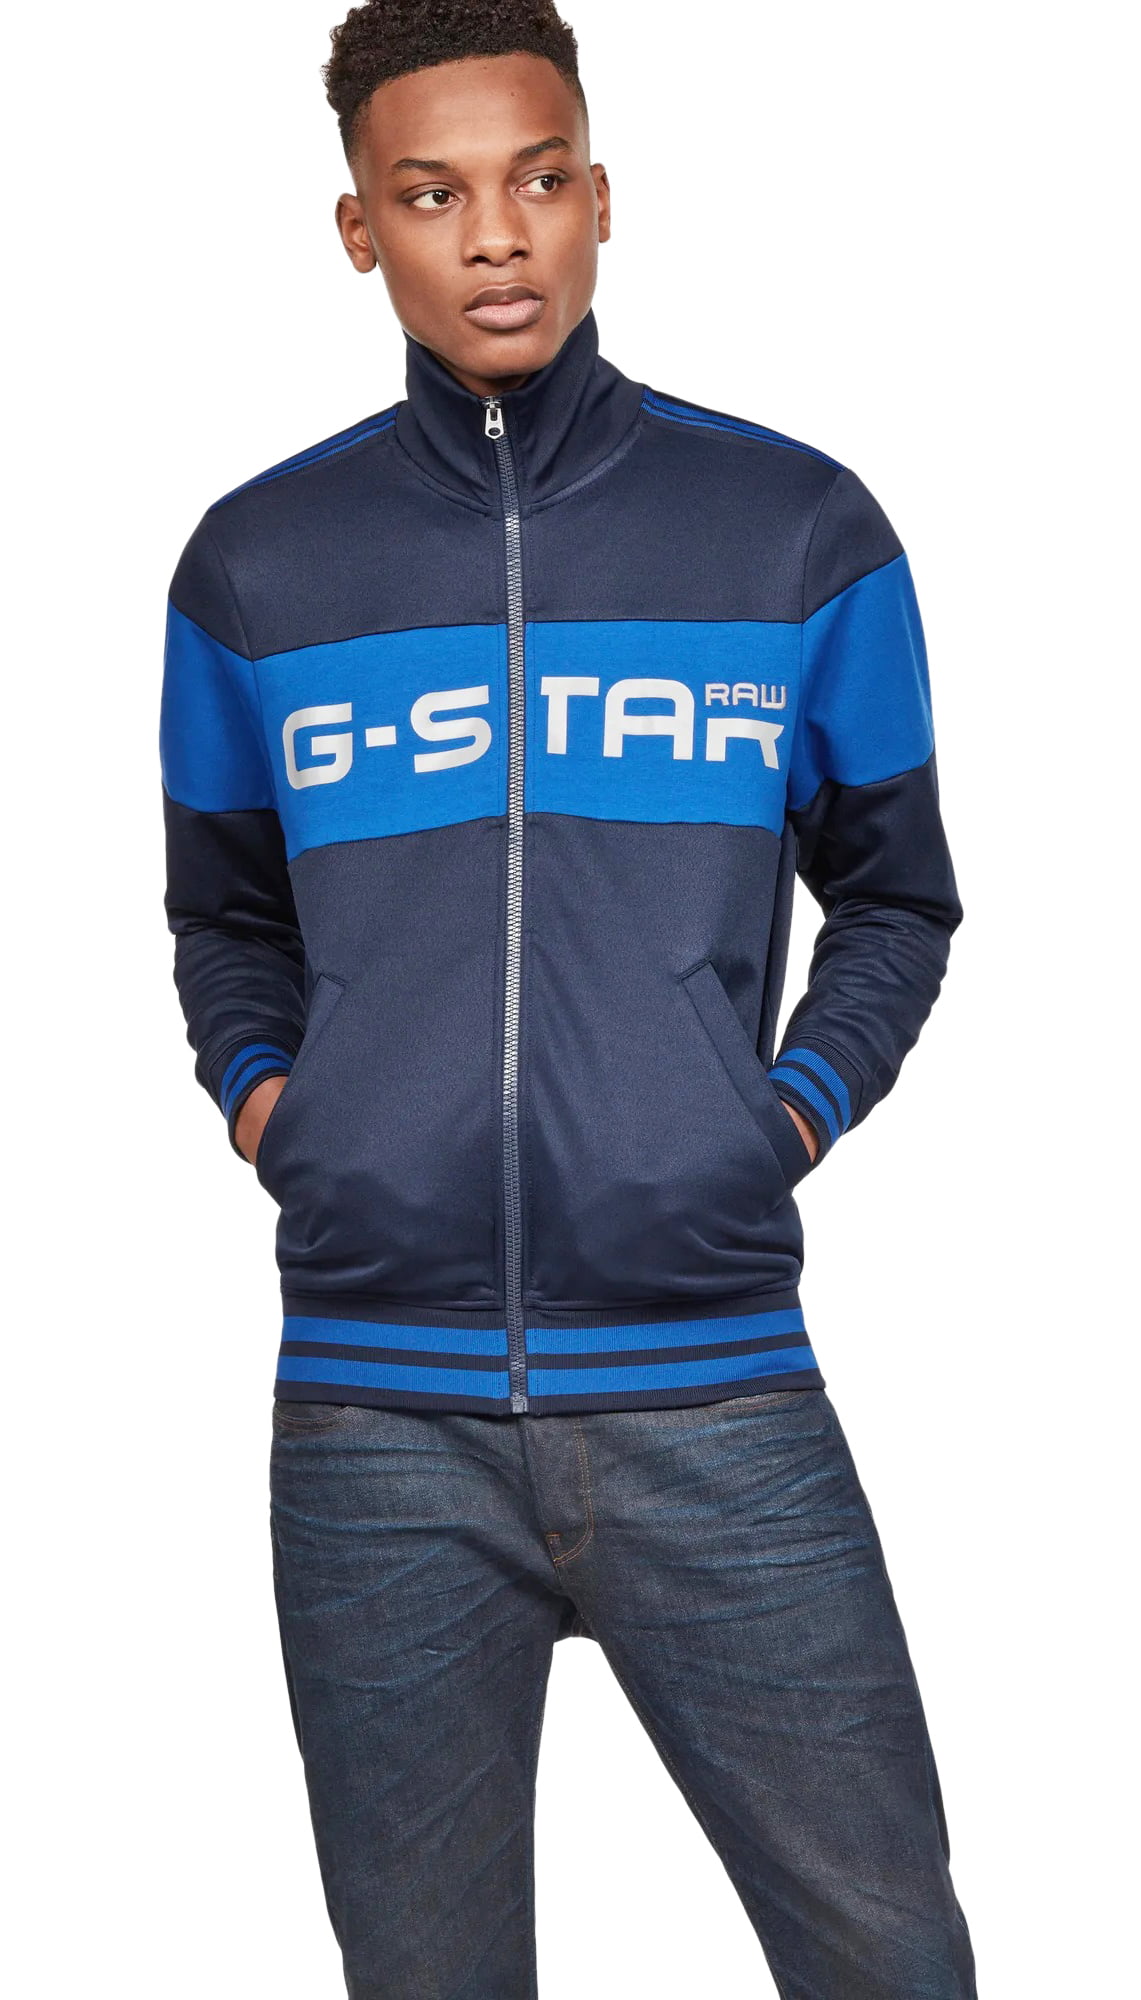 g star track jacket